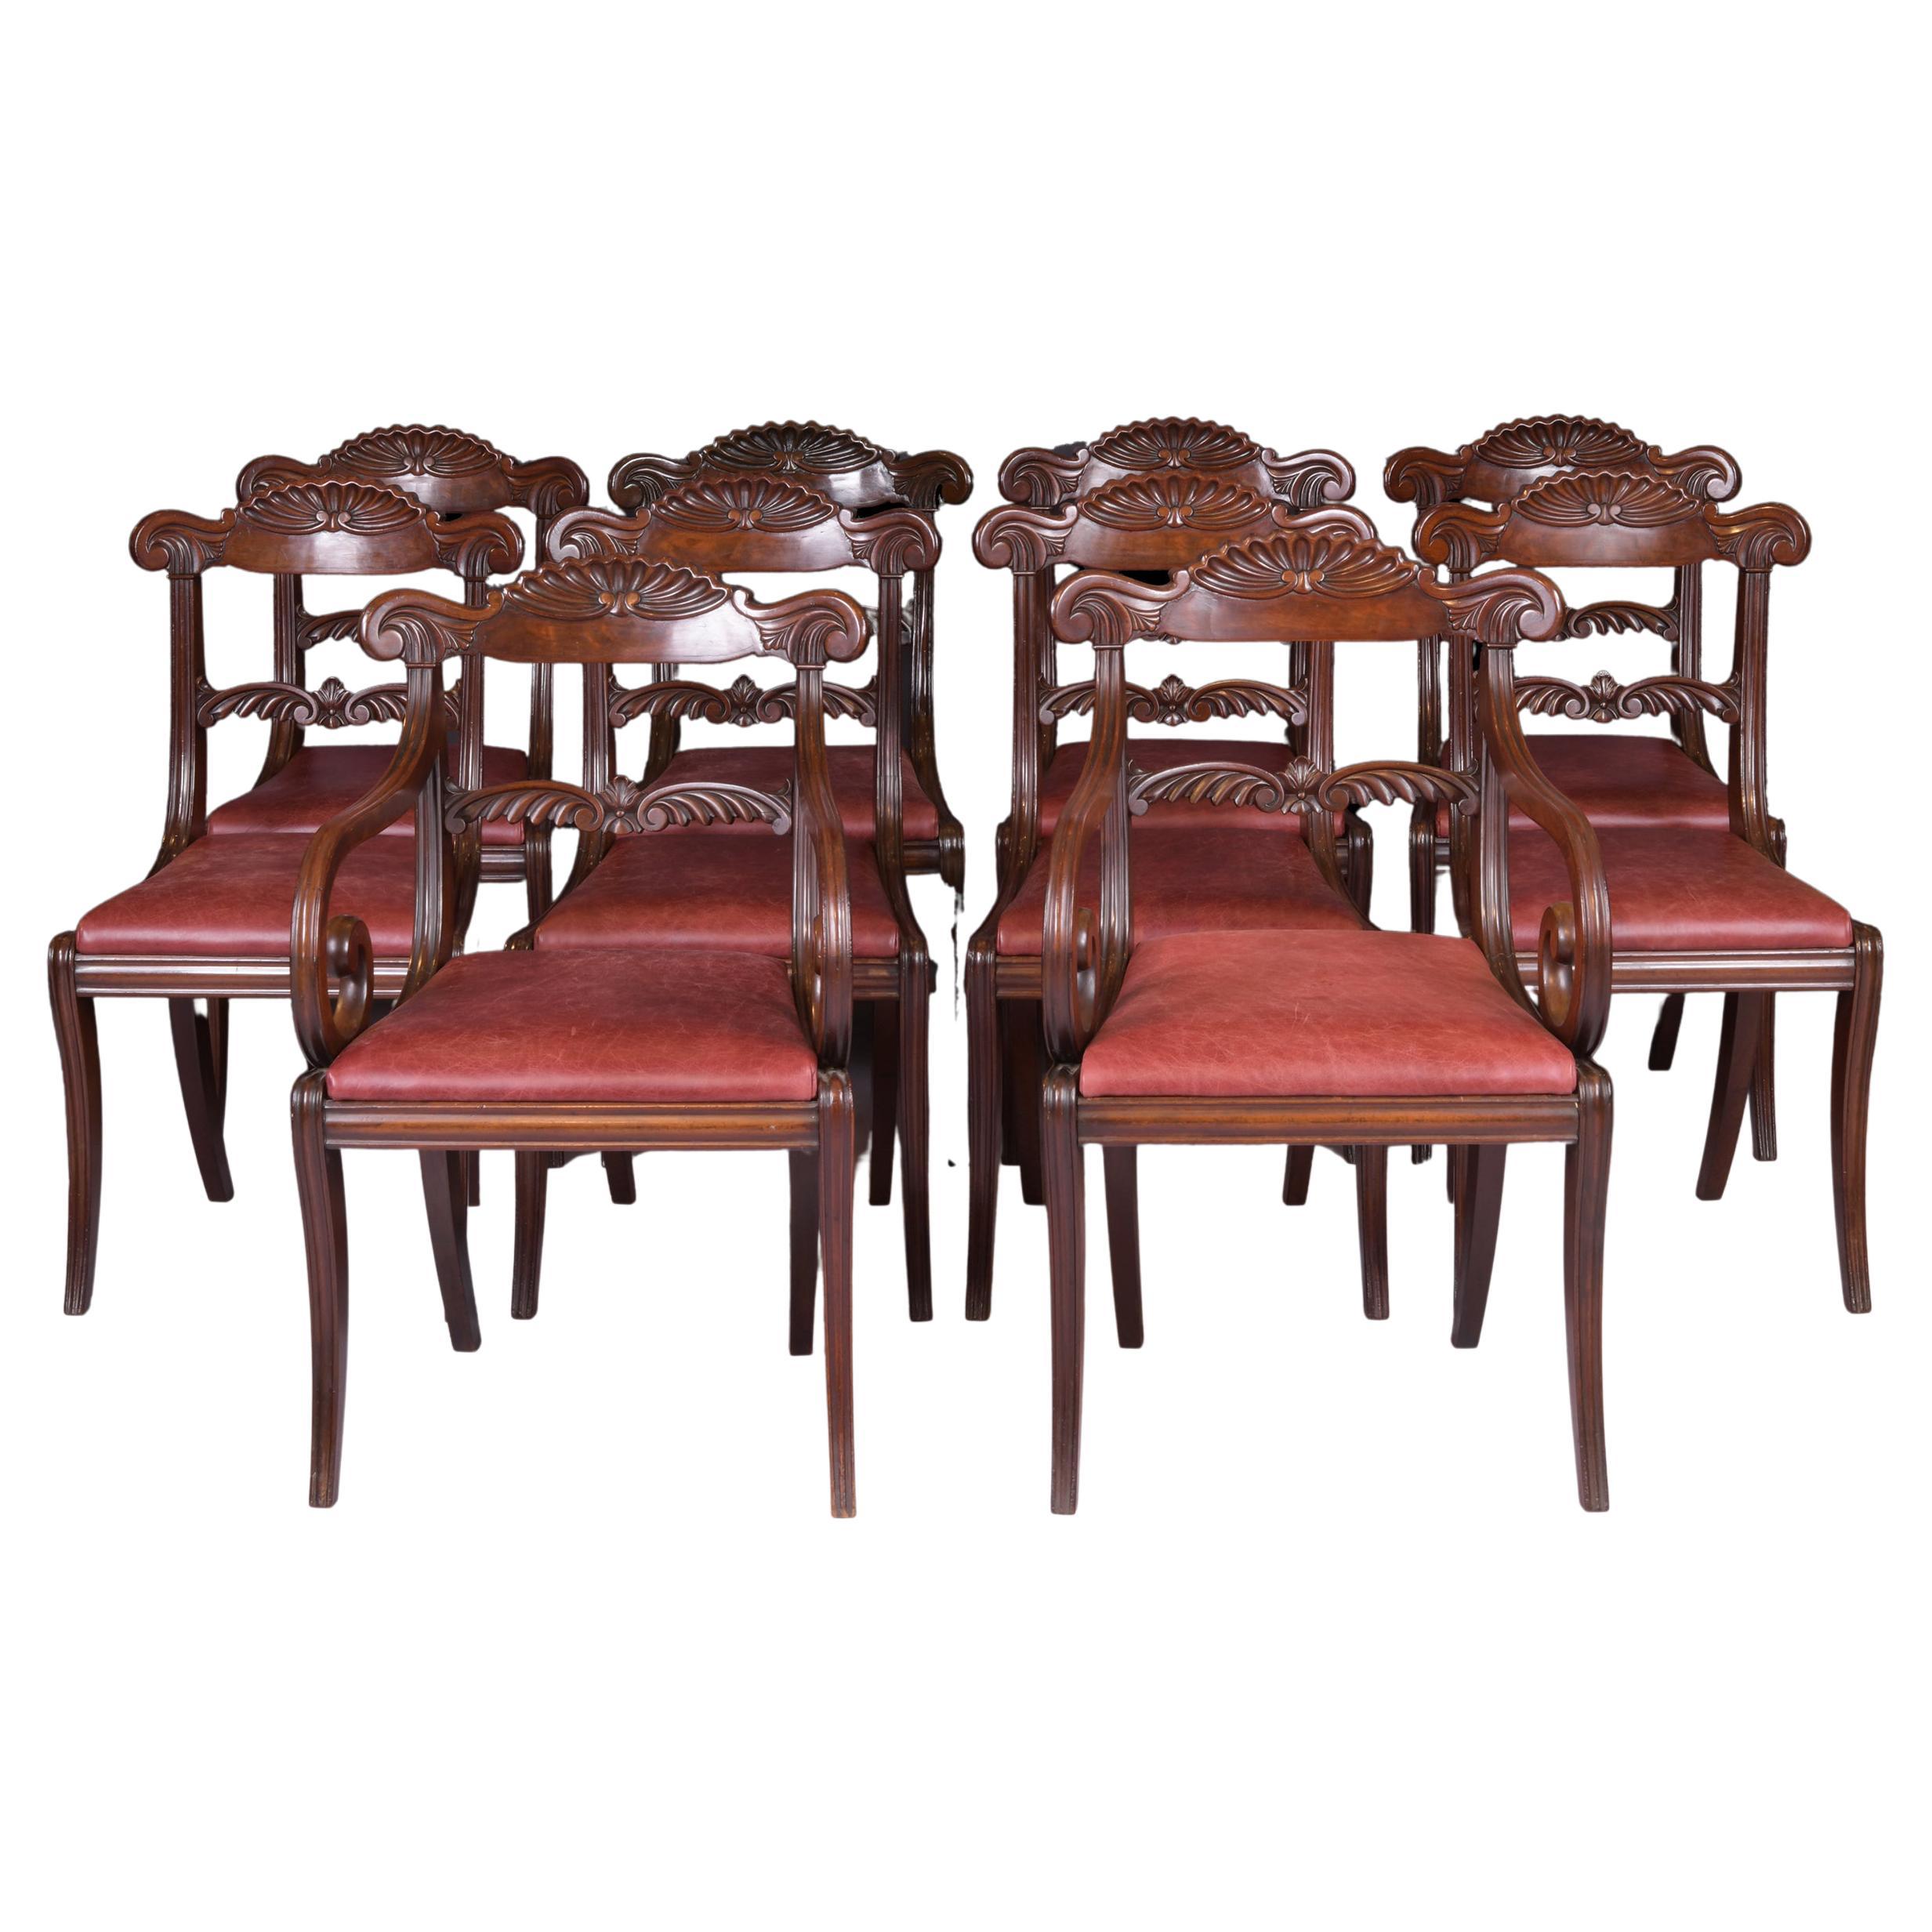 Set of 10 Early 19th Century Regency Mahogany Dining Room Chairs